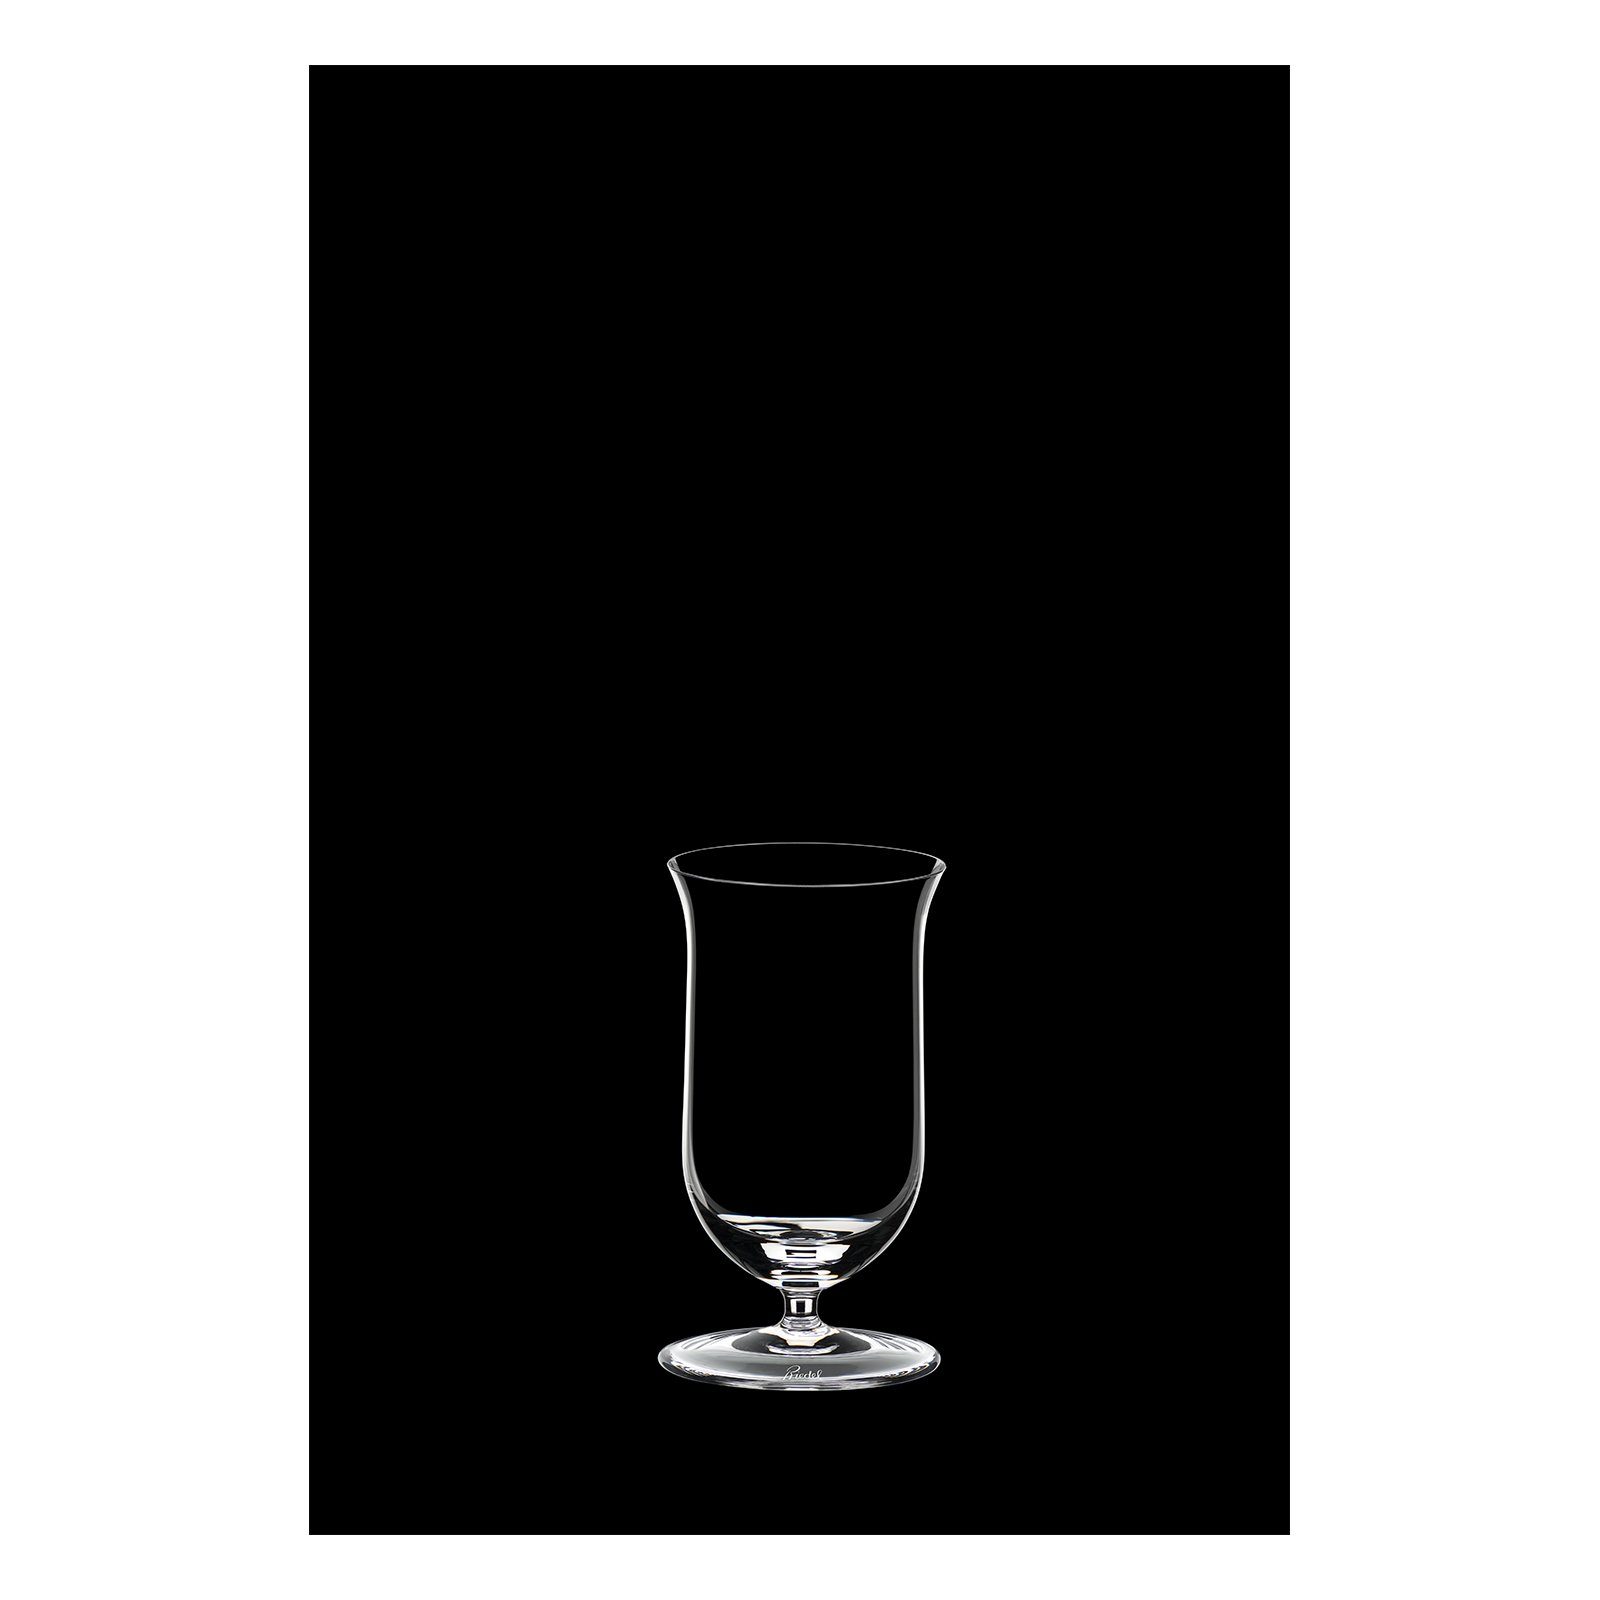 Sommeliers Kristallglas Riedel Whisky, Malt Single Glas RIEDEL Glas